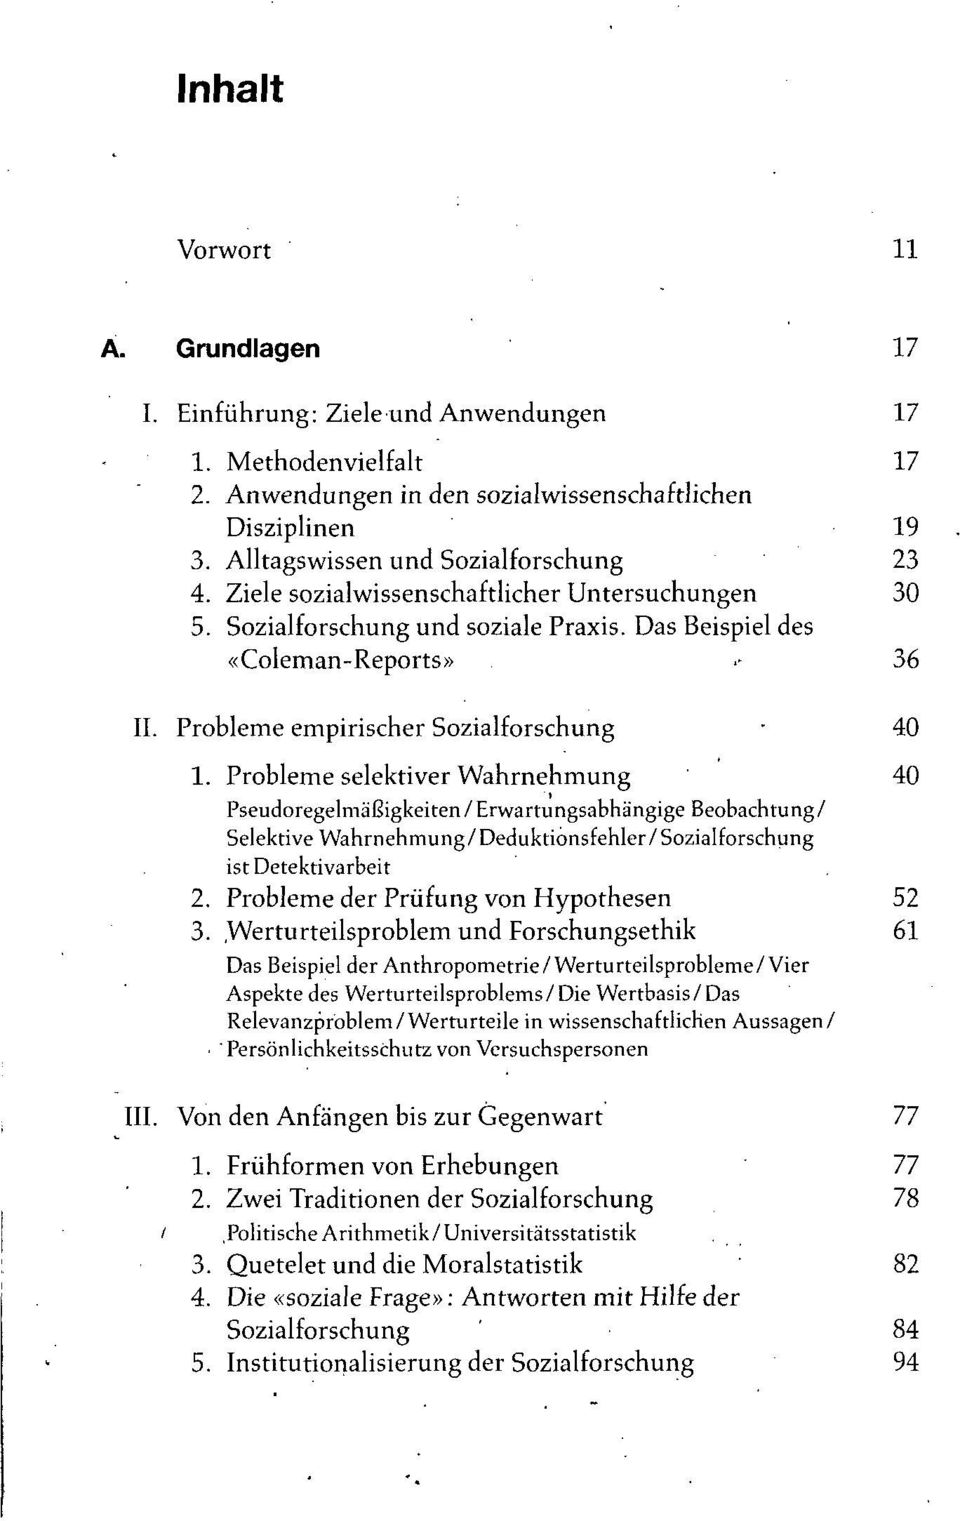 Probleme empirischer Sozialforschung 40 1.